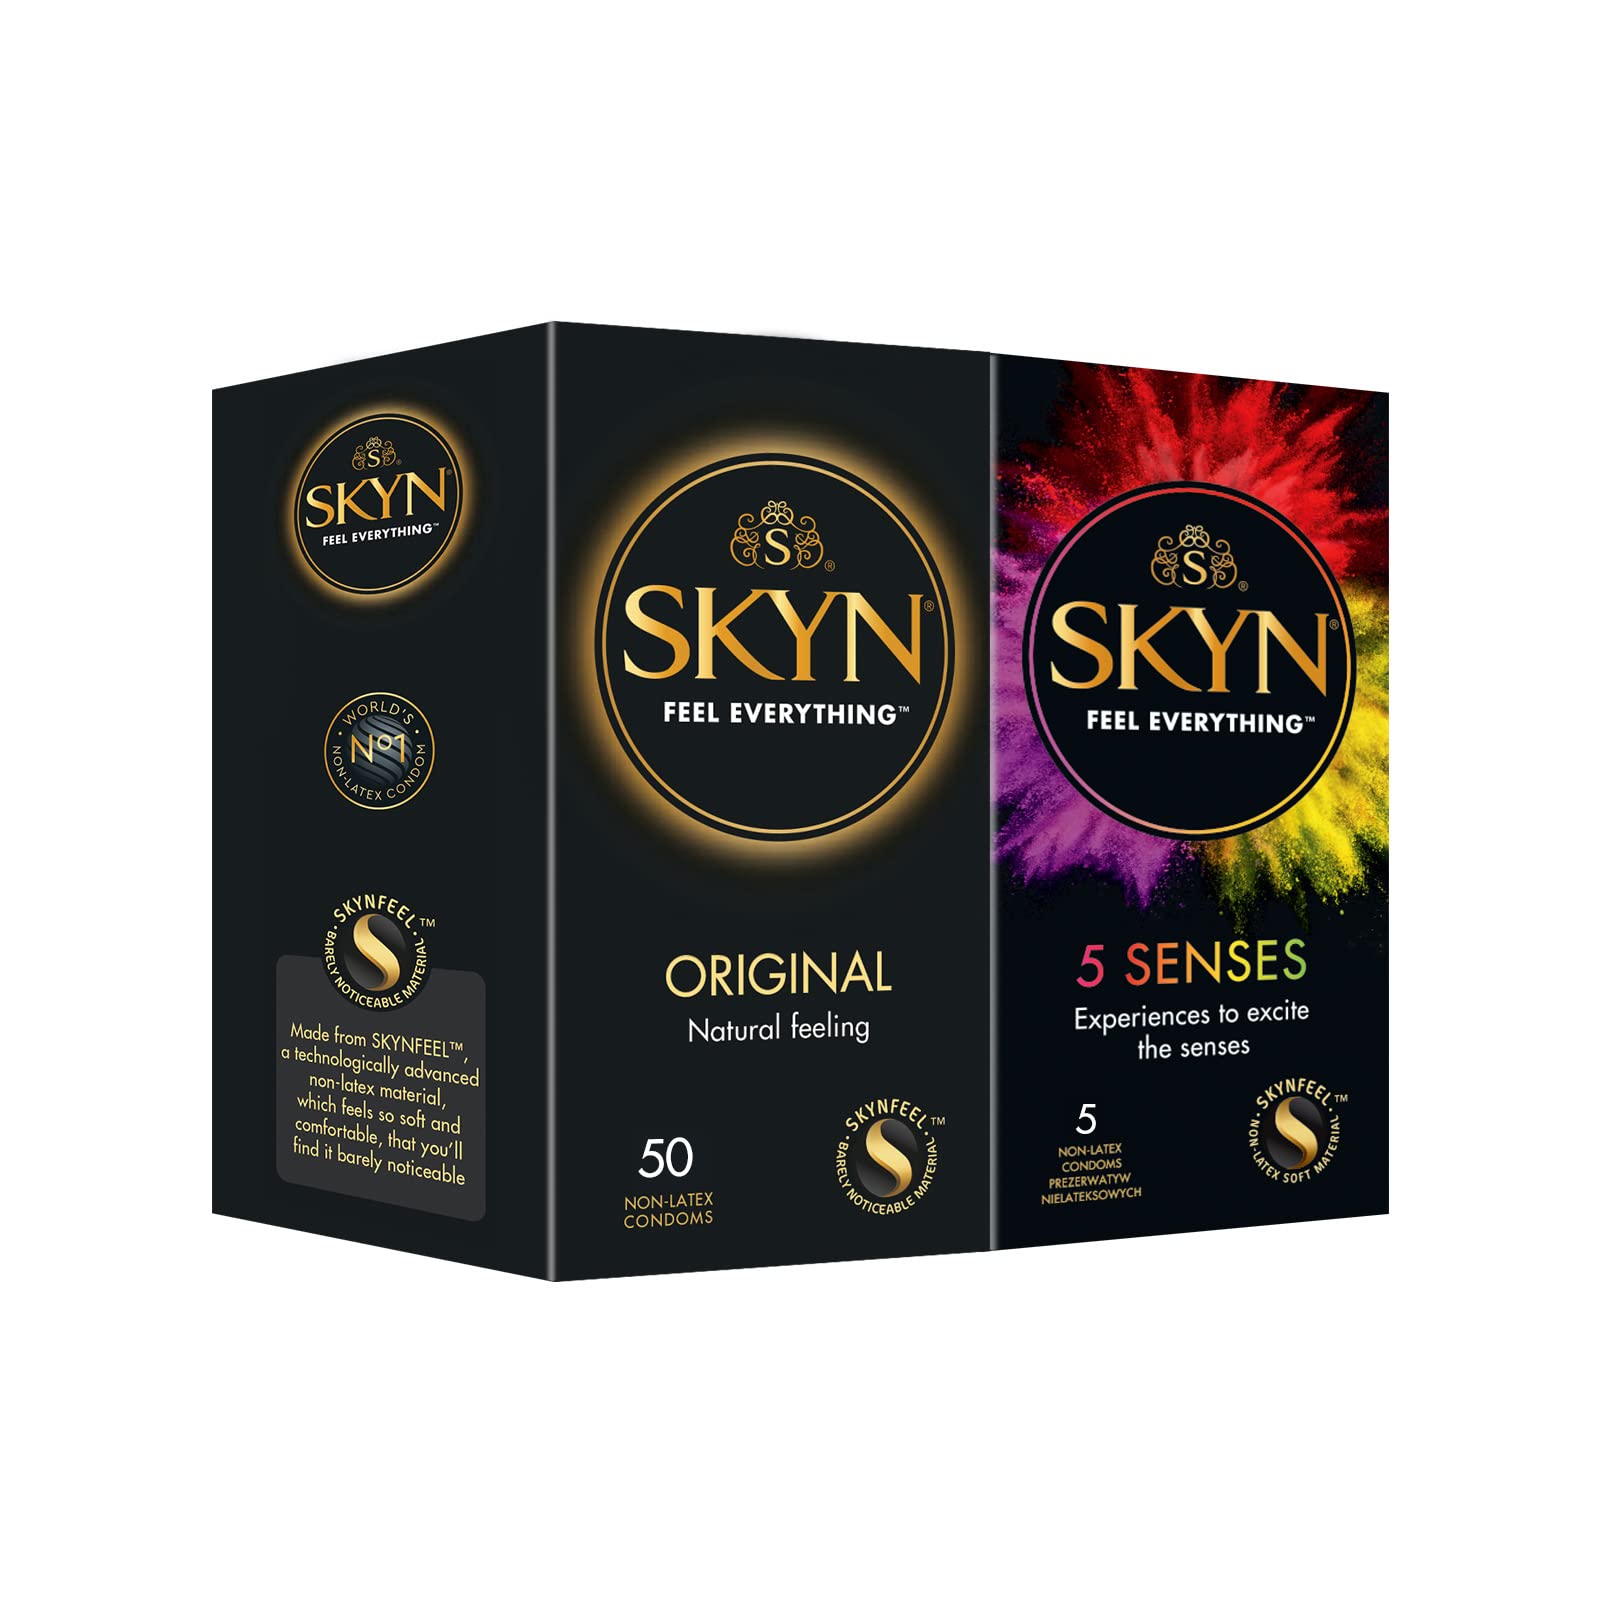 SKYN Original Kondome (50 Stück) & 5 Senses Kondome (5 Stück) | Skynfeel Latexfreie Kondome für Männer, Gefühlsecht Hauchzart, Kondome 53mm Breite